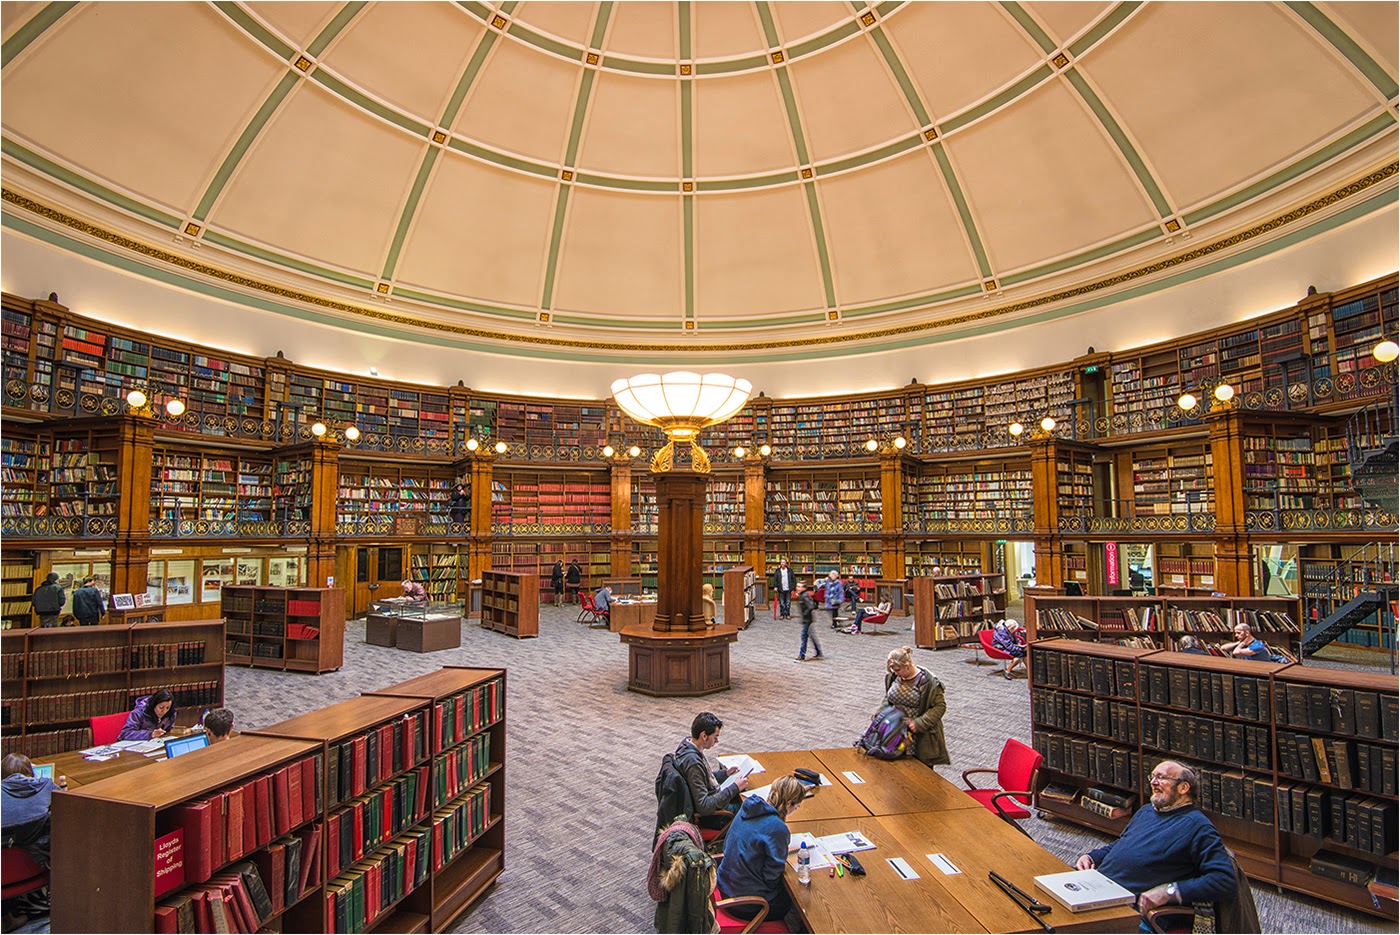 Library 1.8. Стэнфорд университет библиотека. Ливерпульский университет библиотека. Ливерпульский университет Джона Мурса библиотеки. Ливерпуль университет внутри.